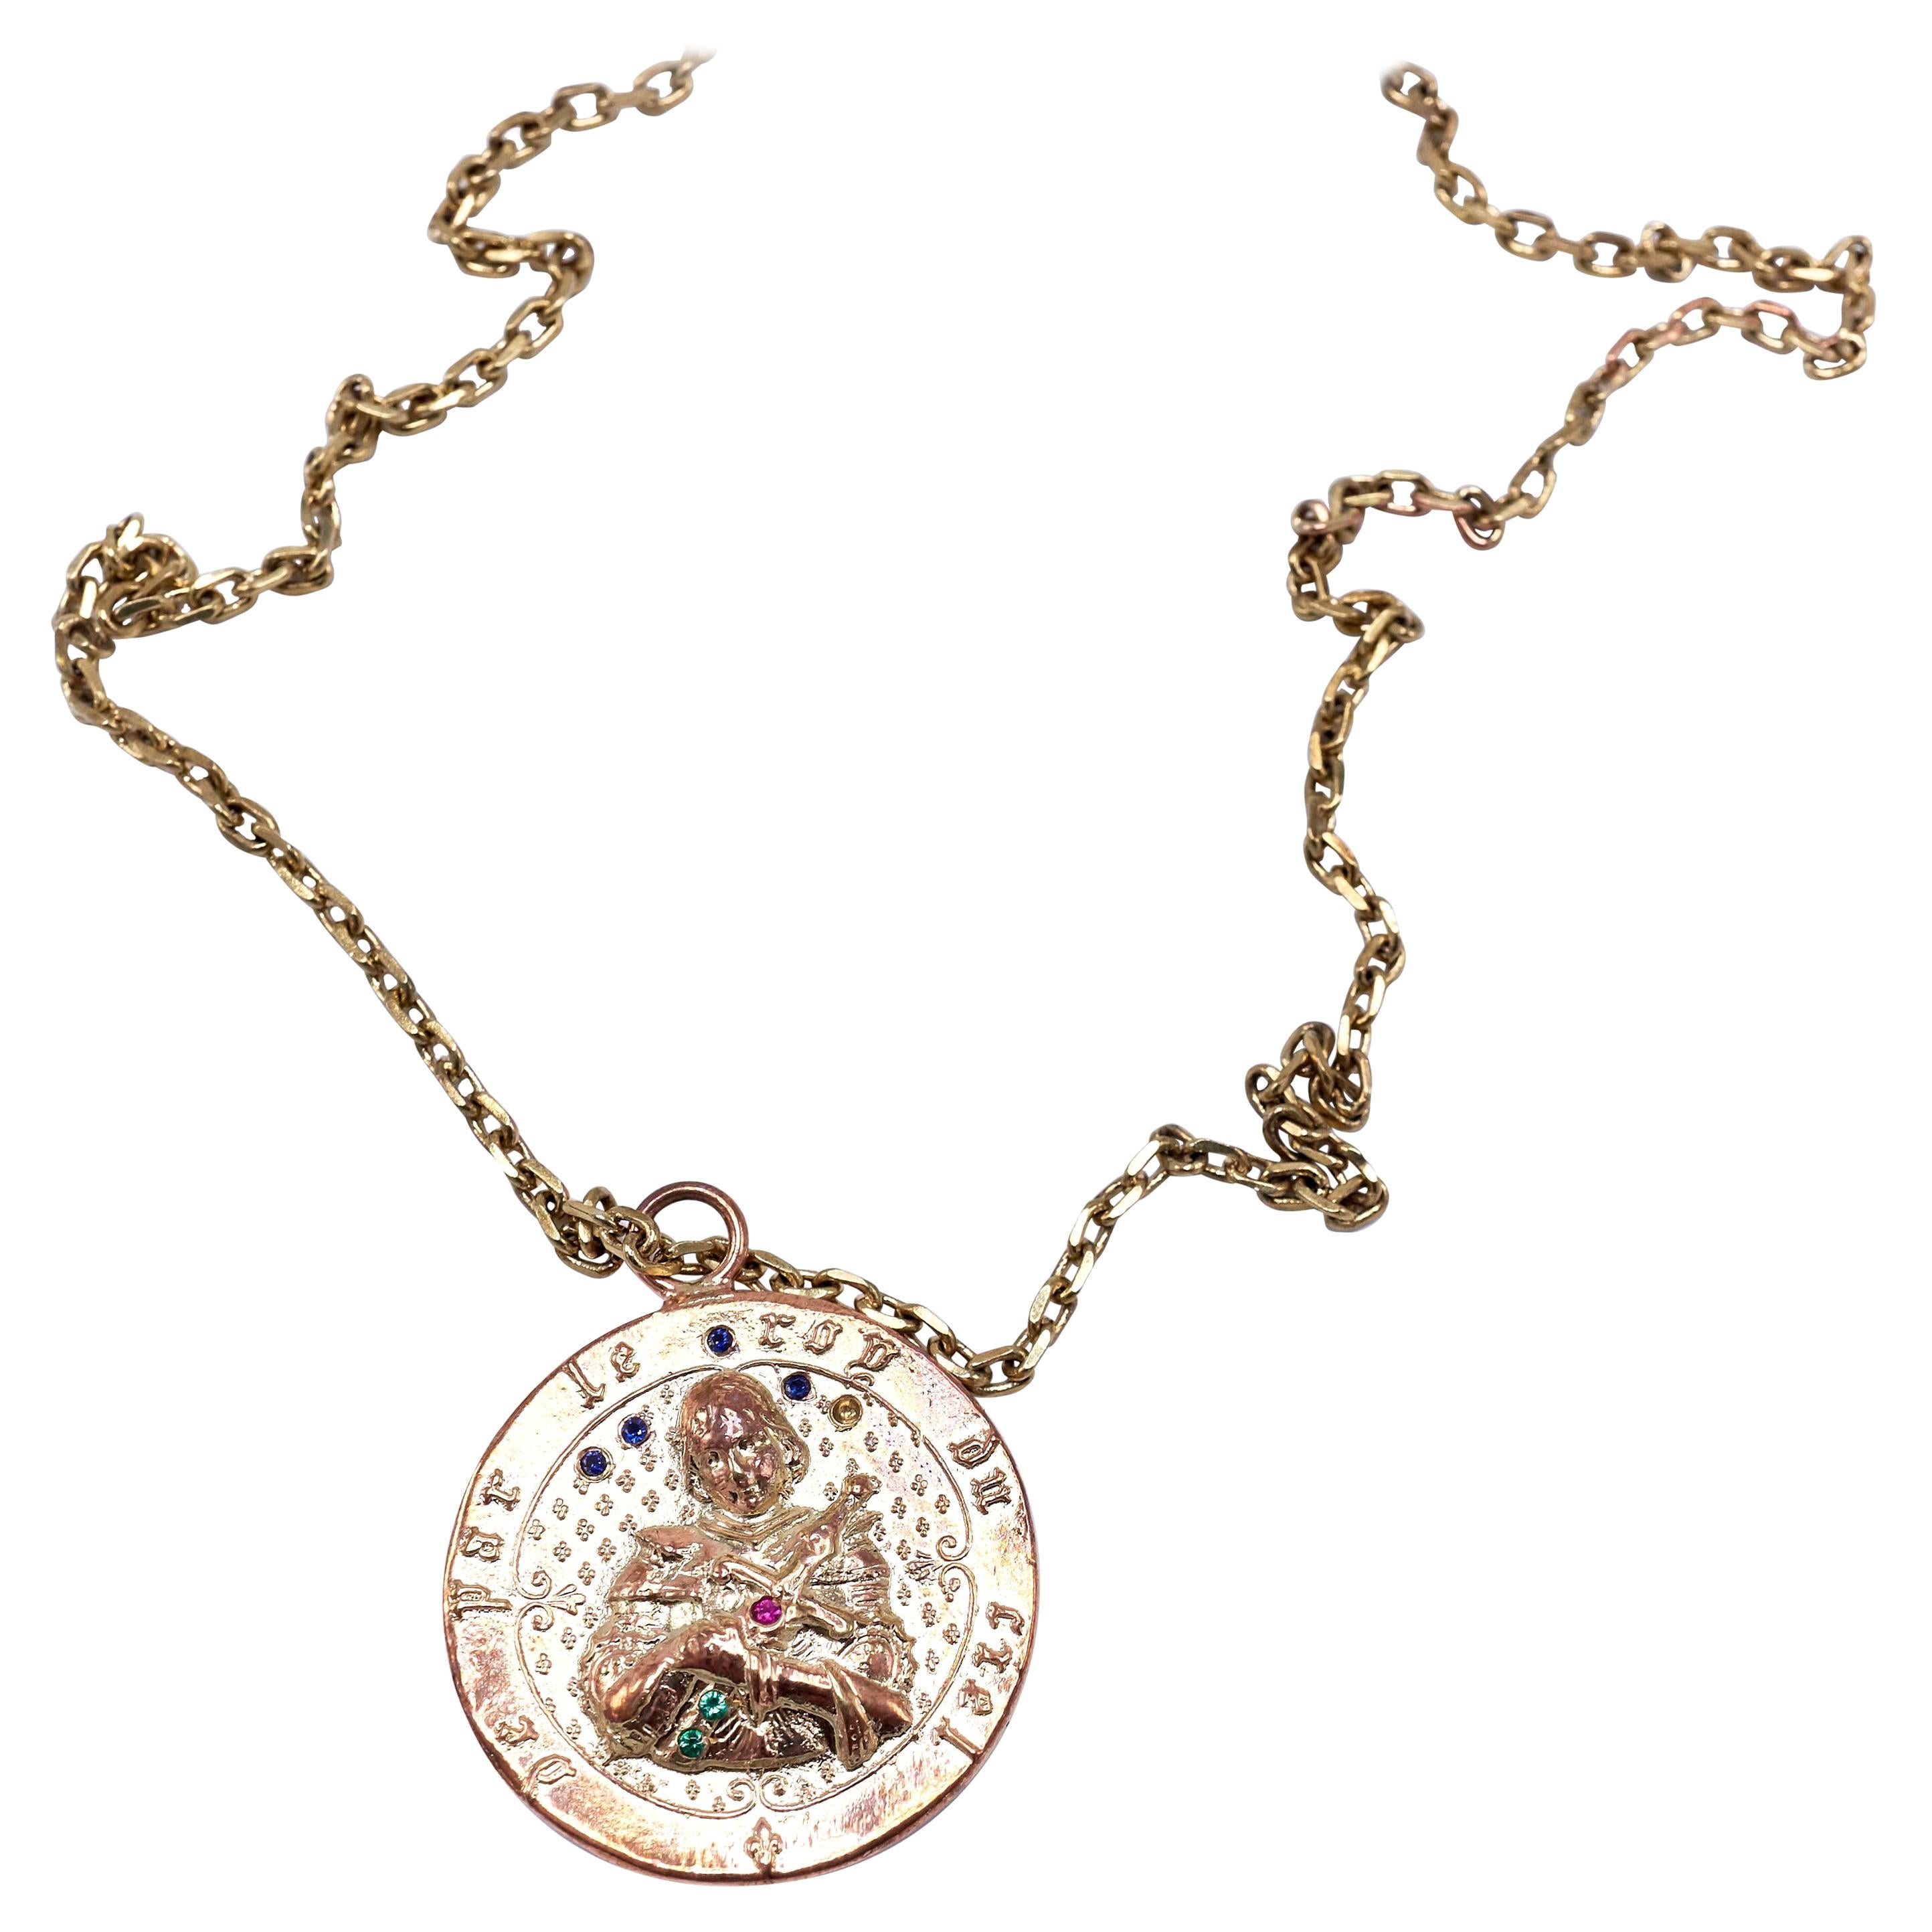 Jeanne d'Arc Medaille Vergoldete Halskette Rubin Smaragd Blauer Saphir J DAUPHIN

J DAUPHIN 